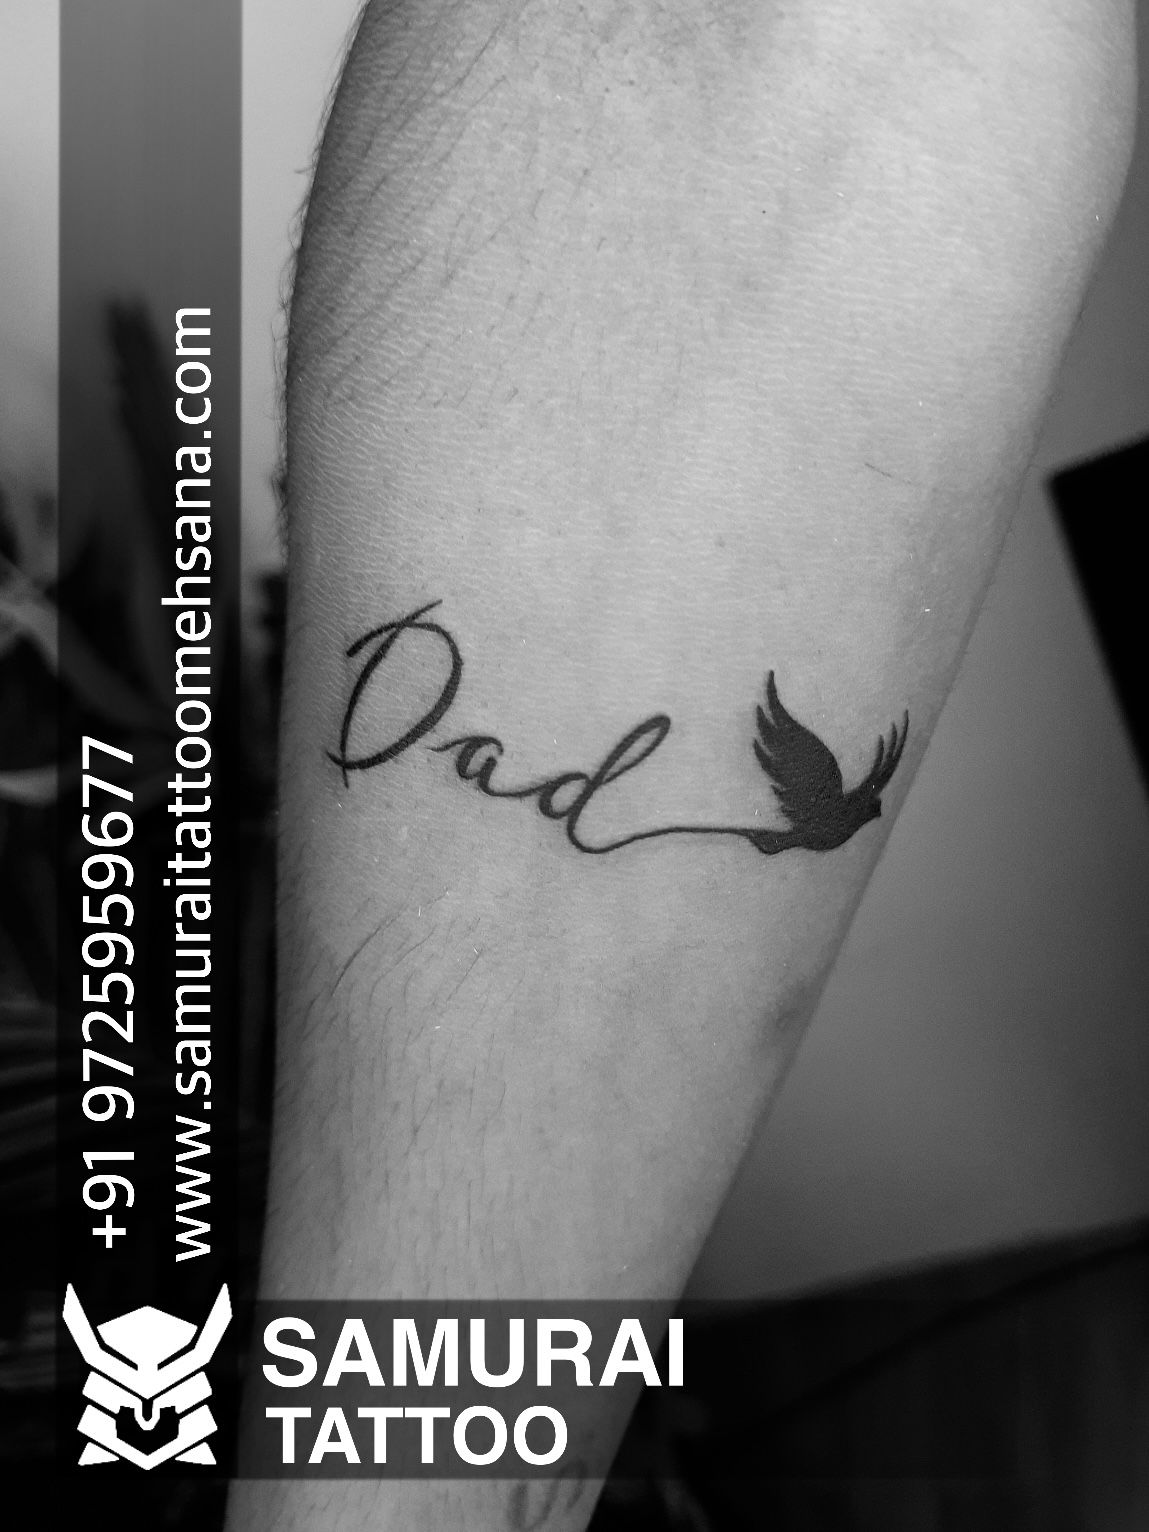 ArtStation  Mom Dad Tattoo with hearts